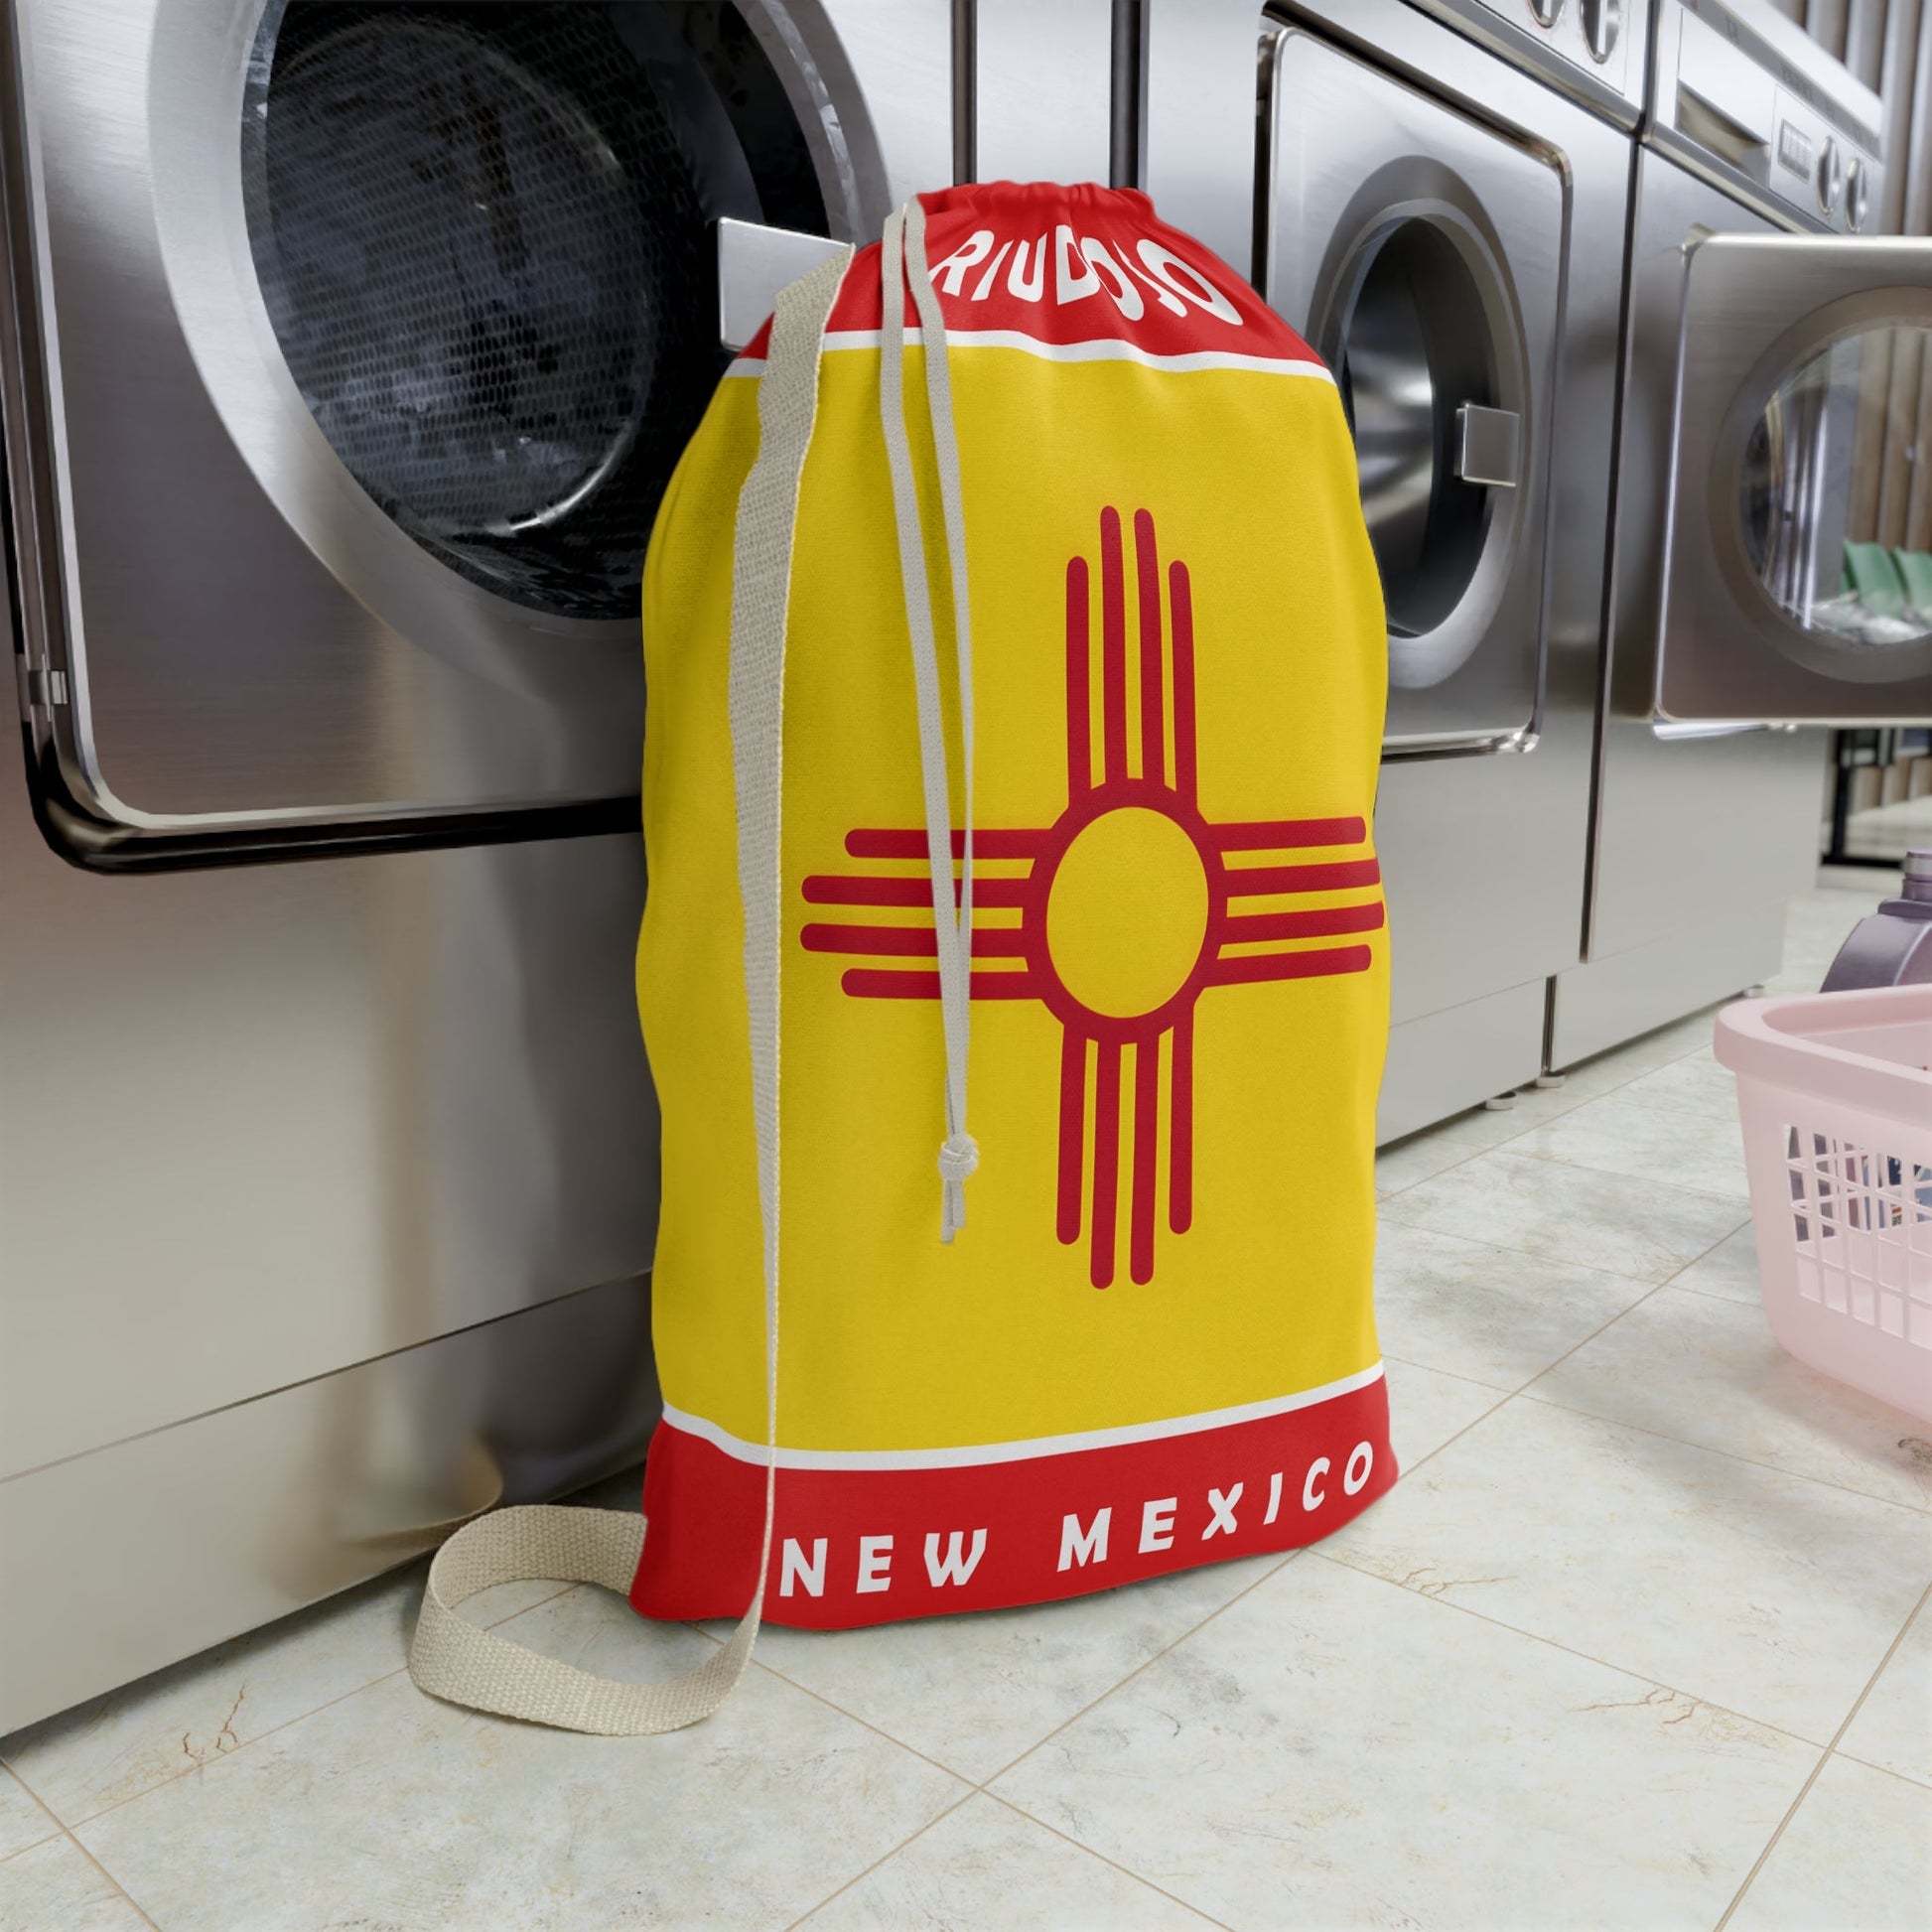 Abiquiu New Mexico Laundry Bag